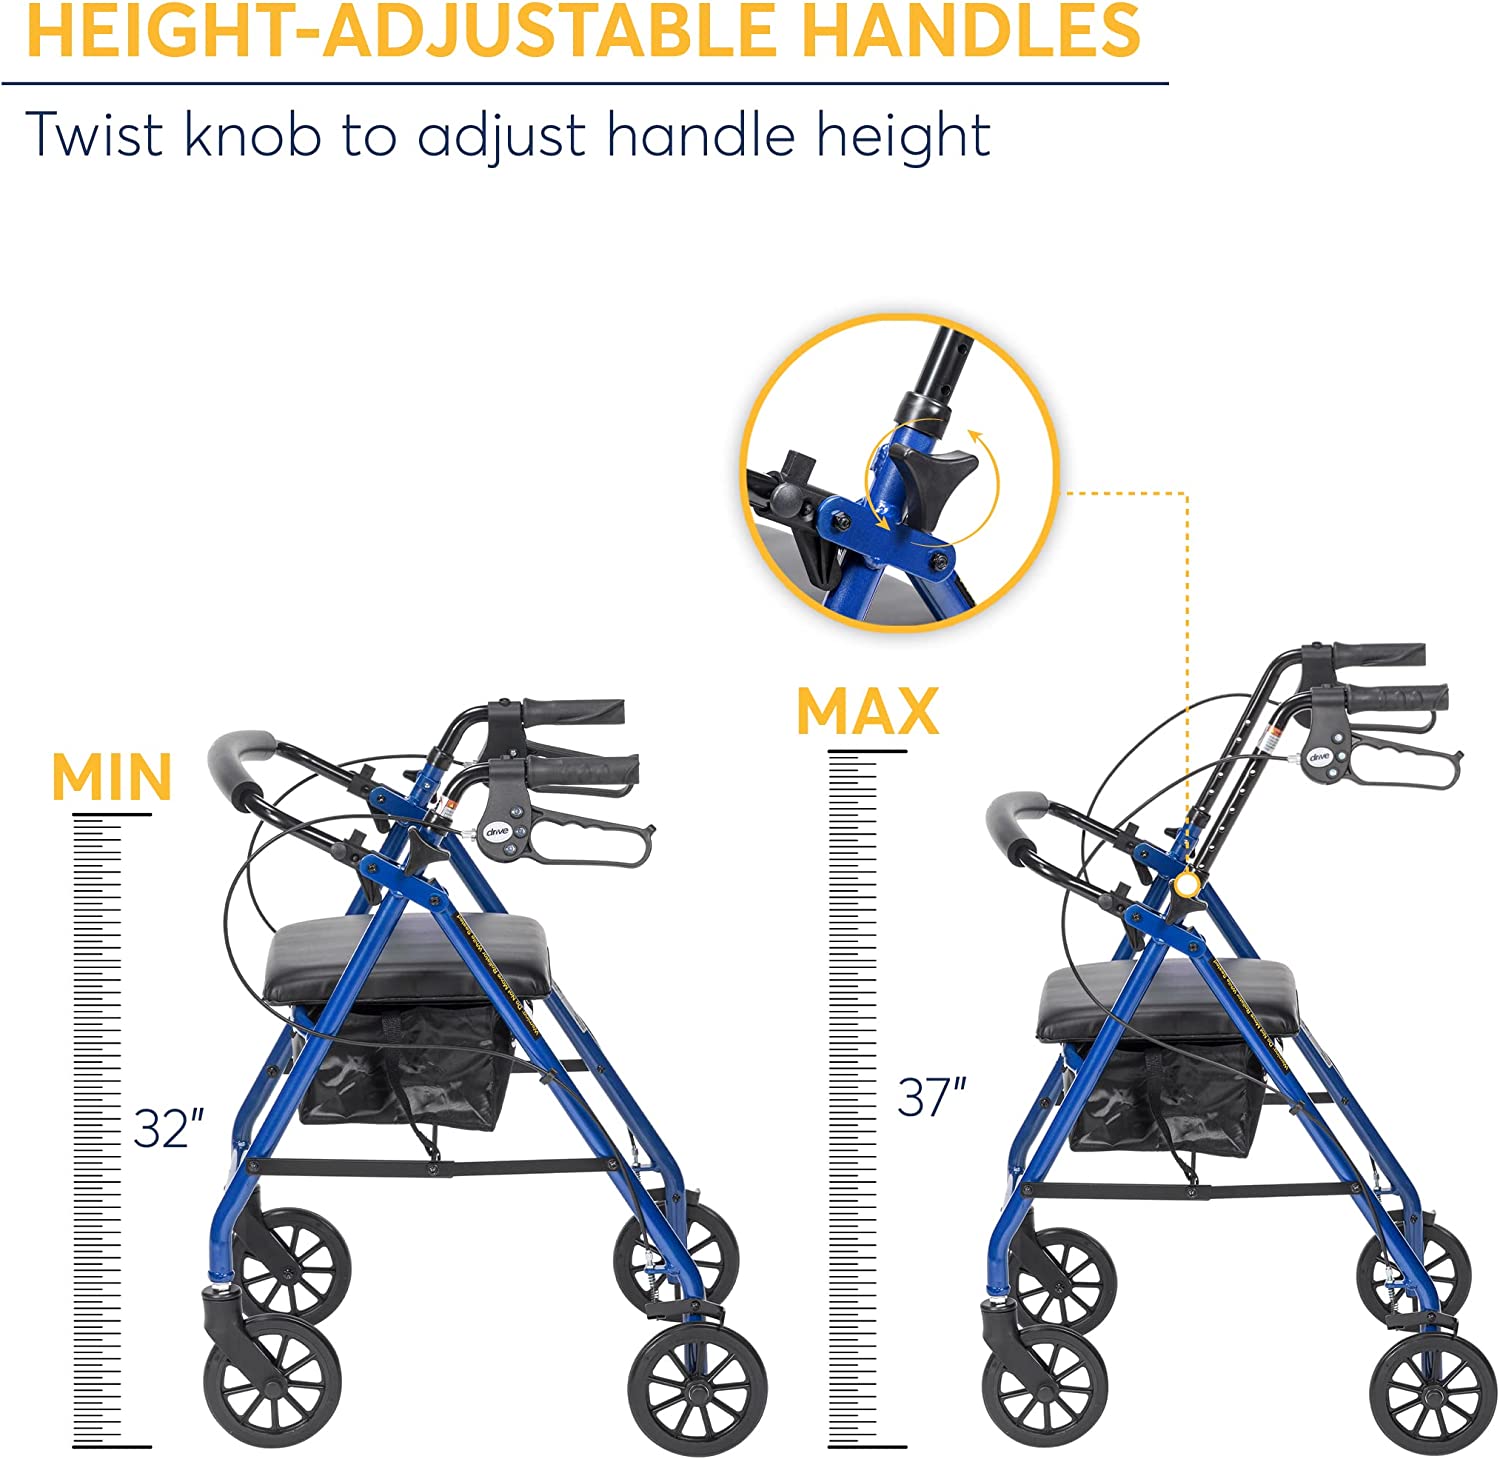 adjustable height handles on rollator